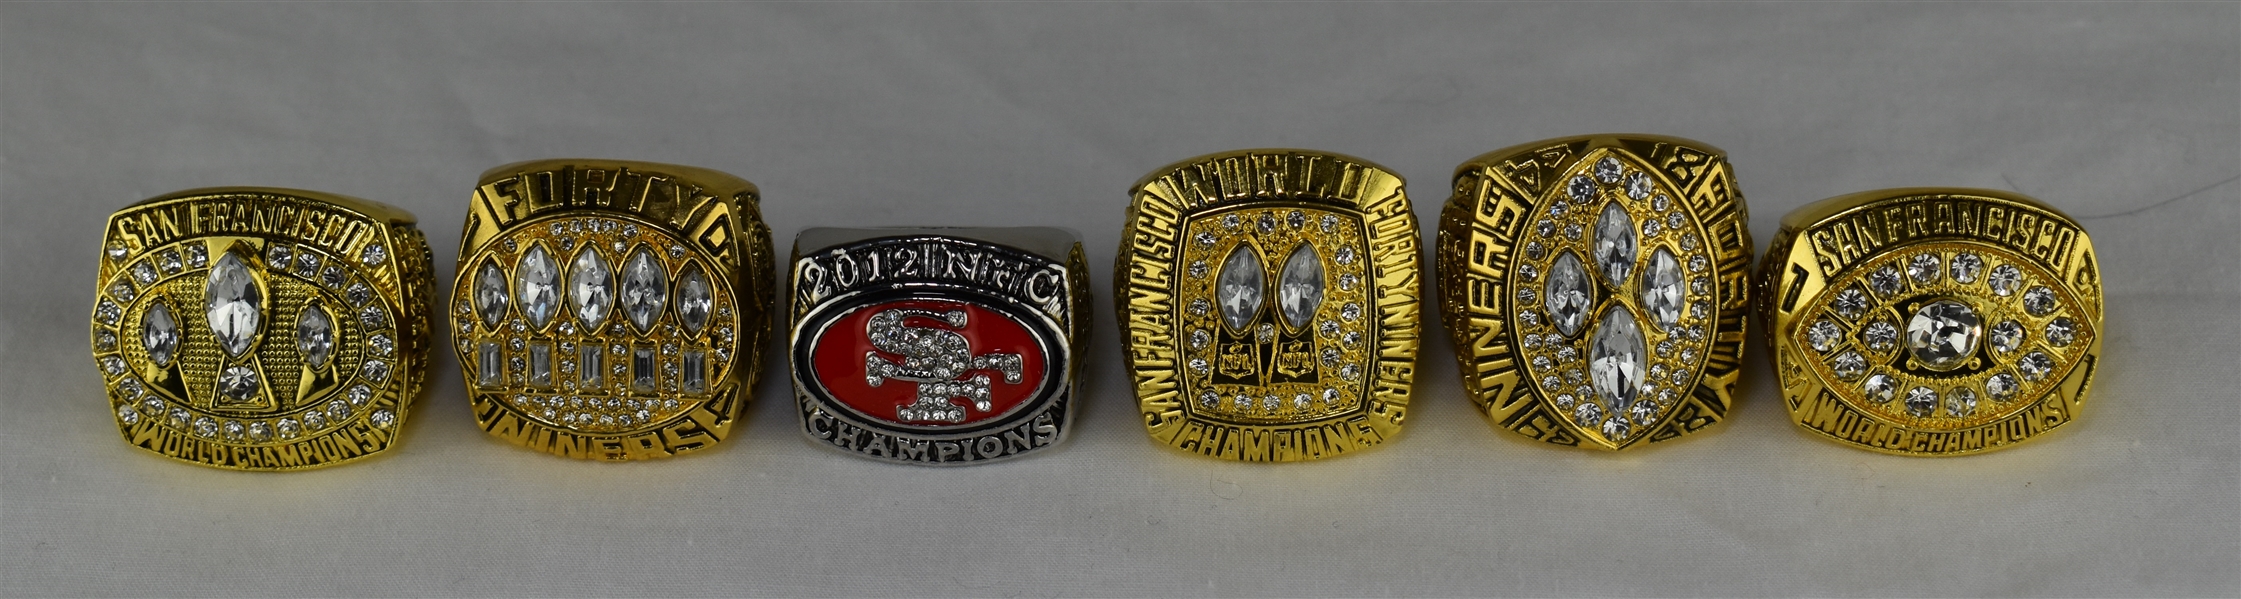 Pat Mahomes & San Francisco Forty Niners Lot of 8 Replica Super Bowl Championship Rings